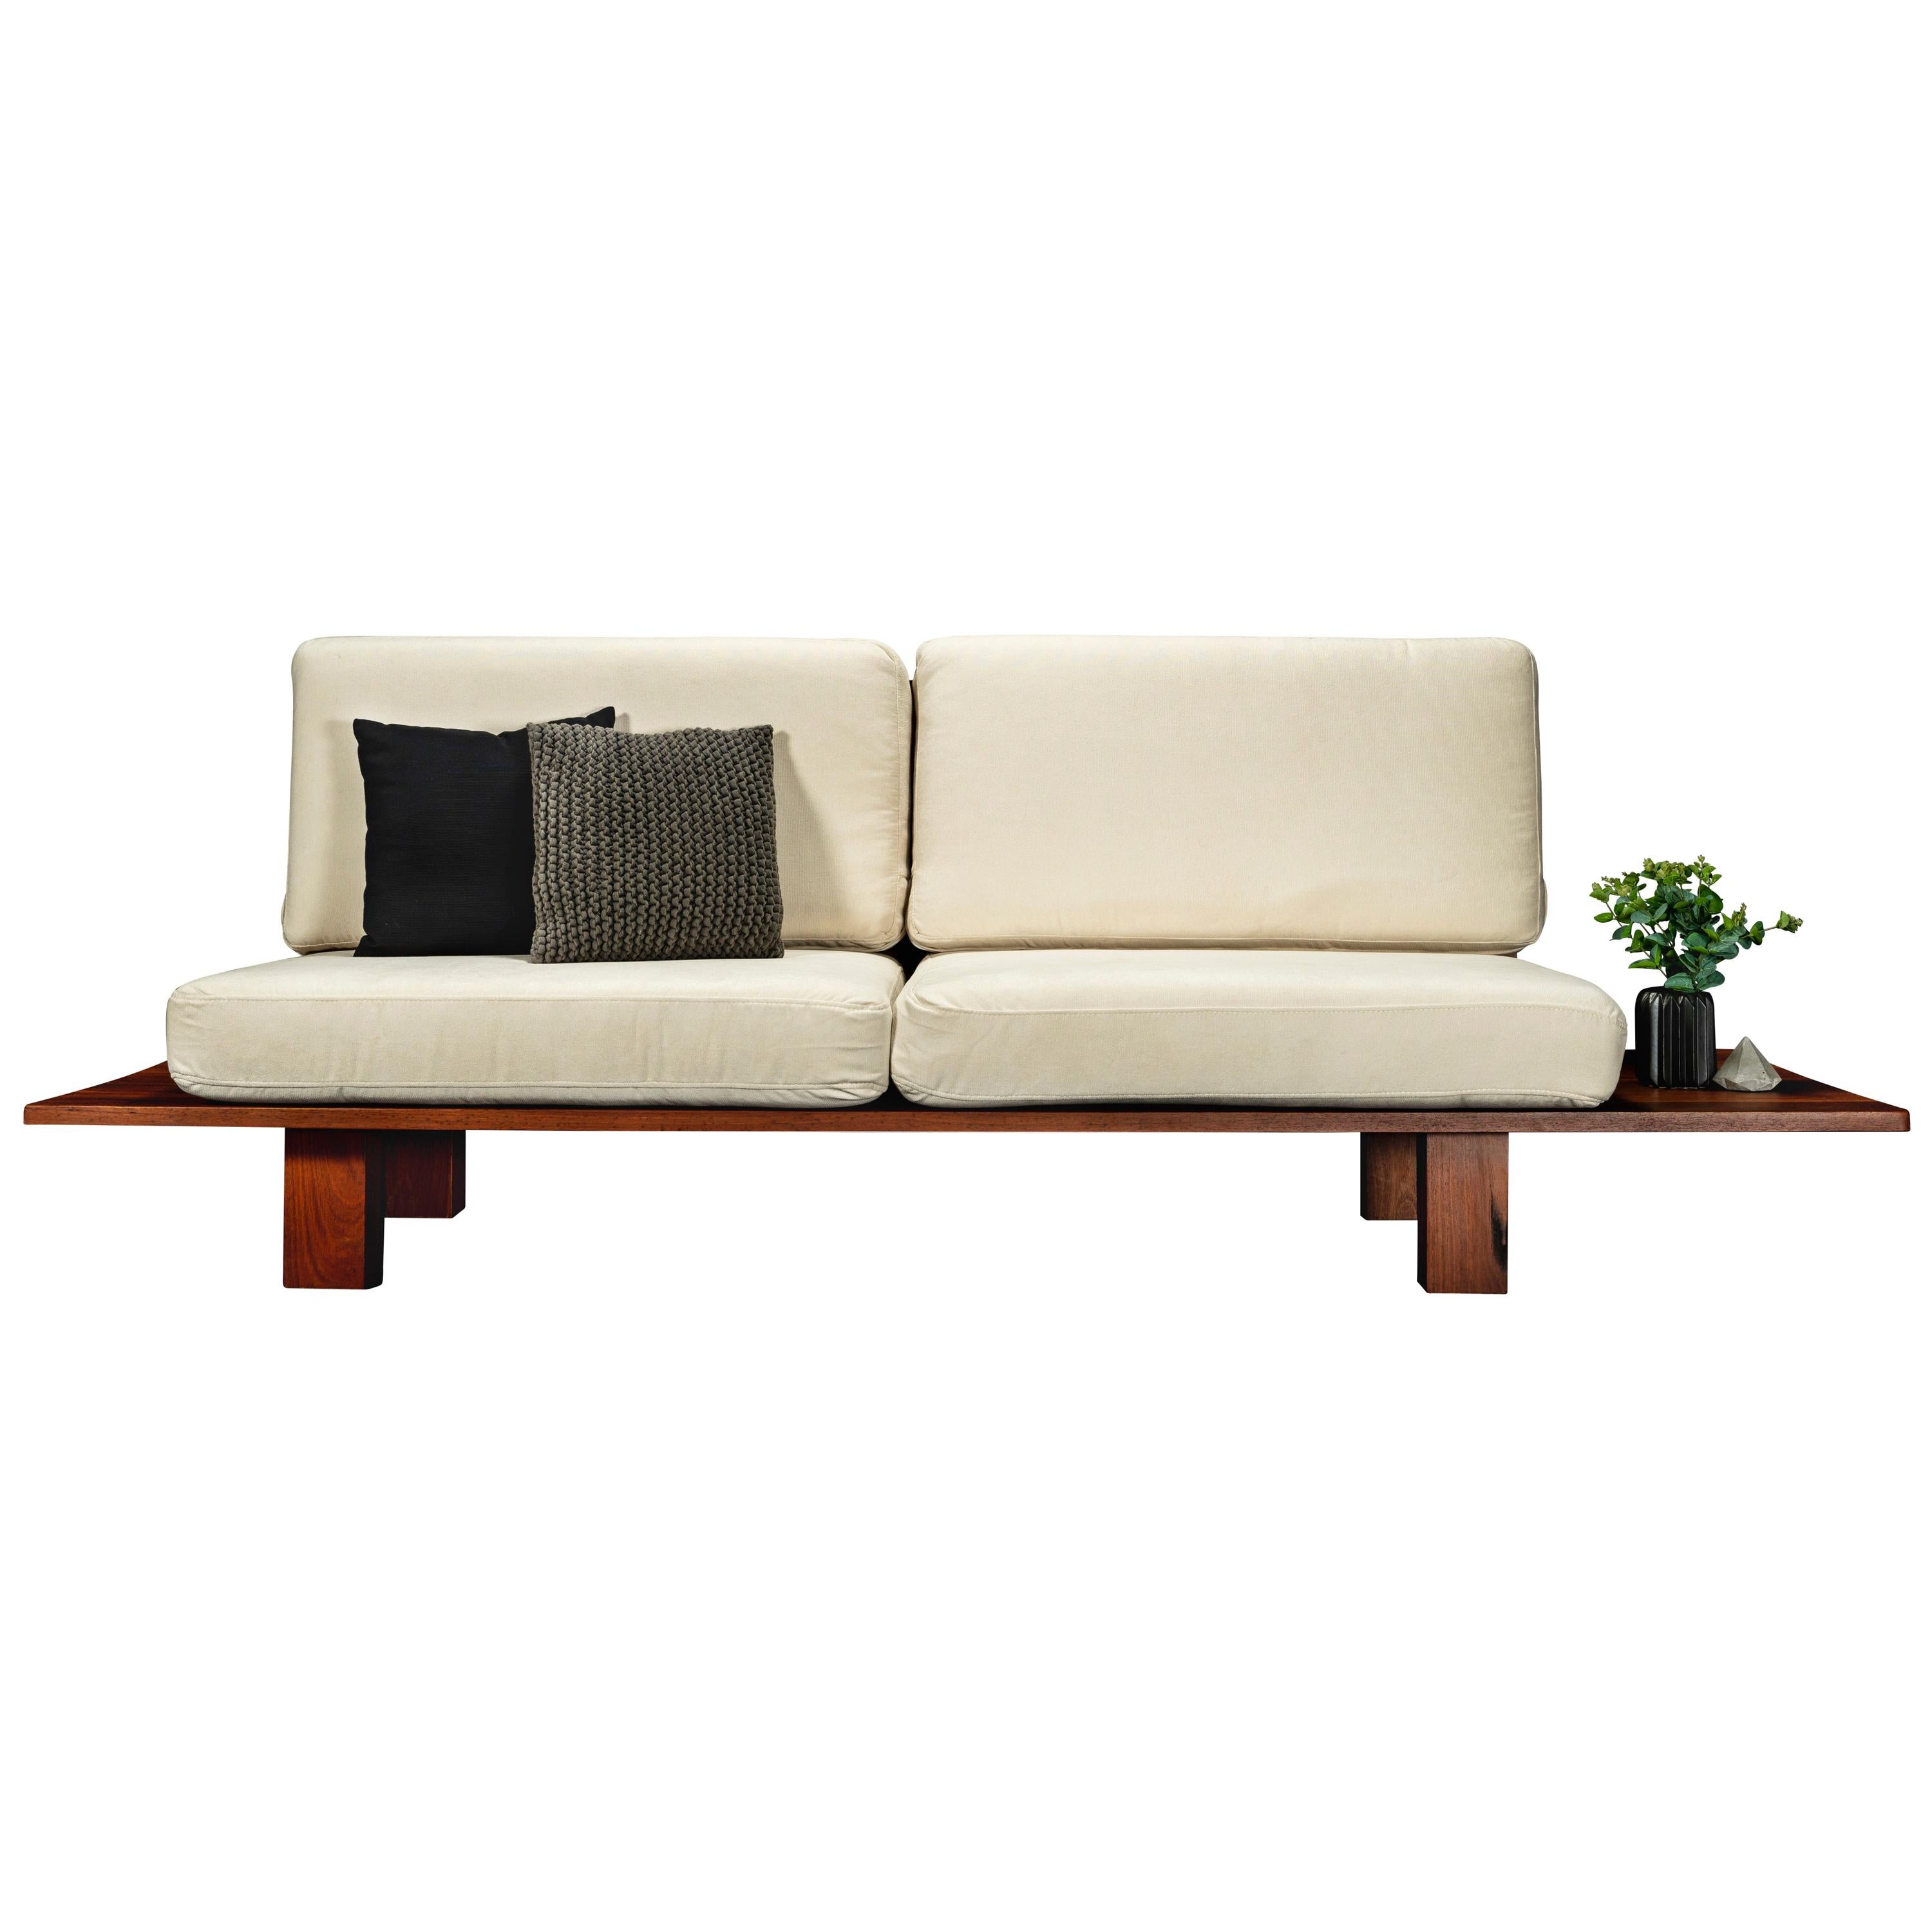 Nullarbor Sofa, Handcrafted in Western Australian Jarrah Hardwood For Sale